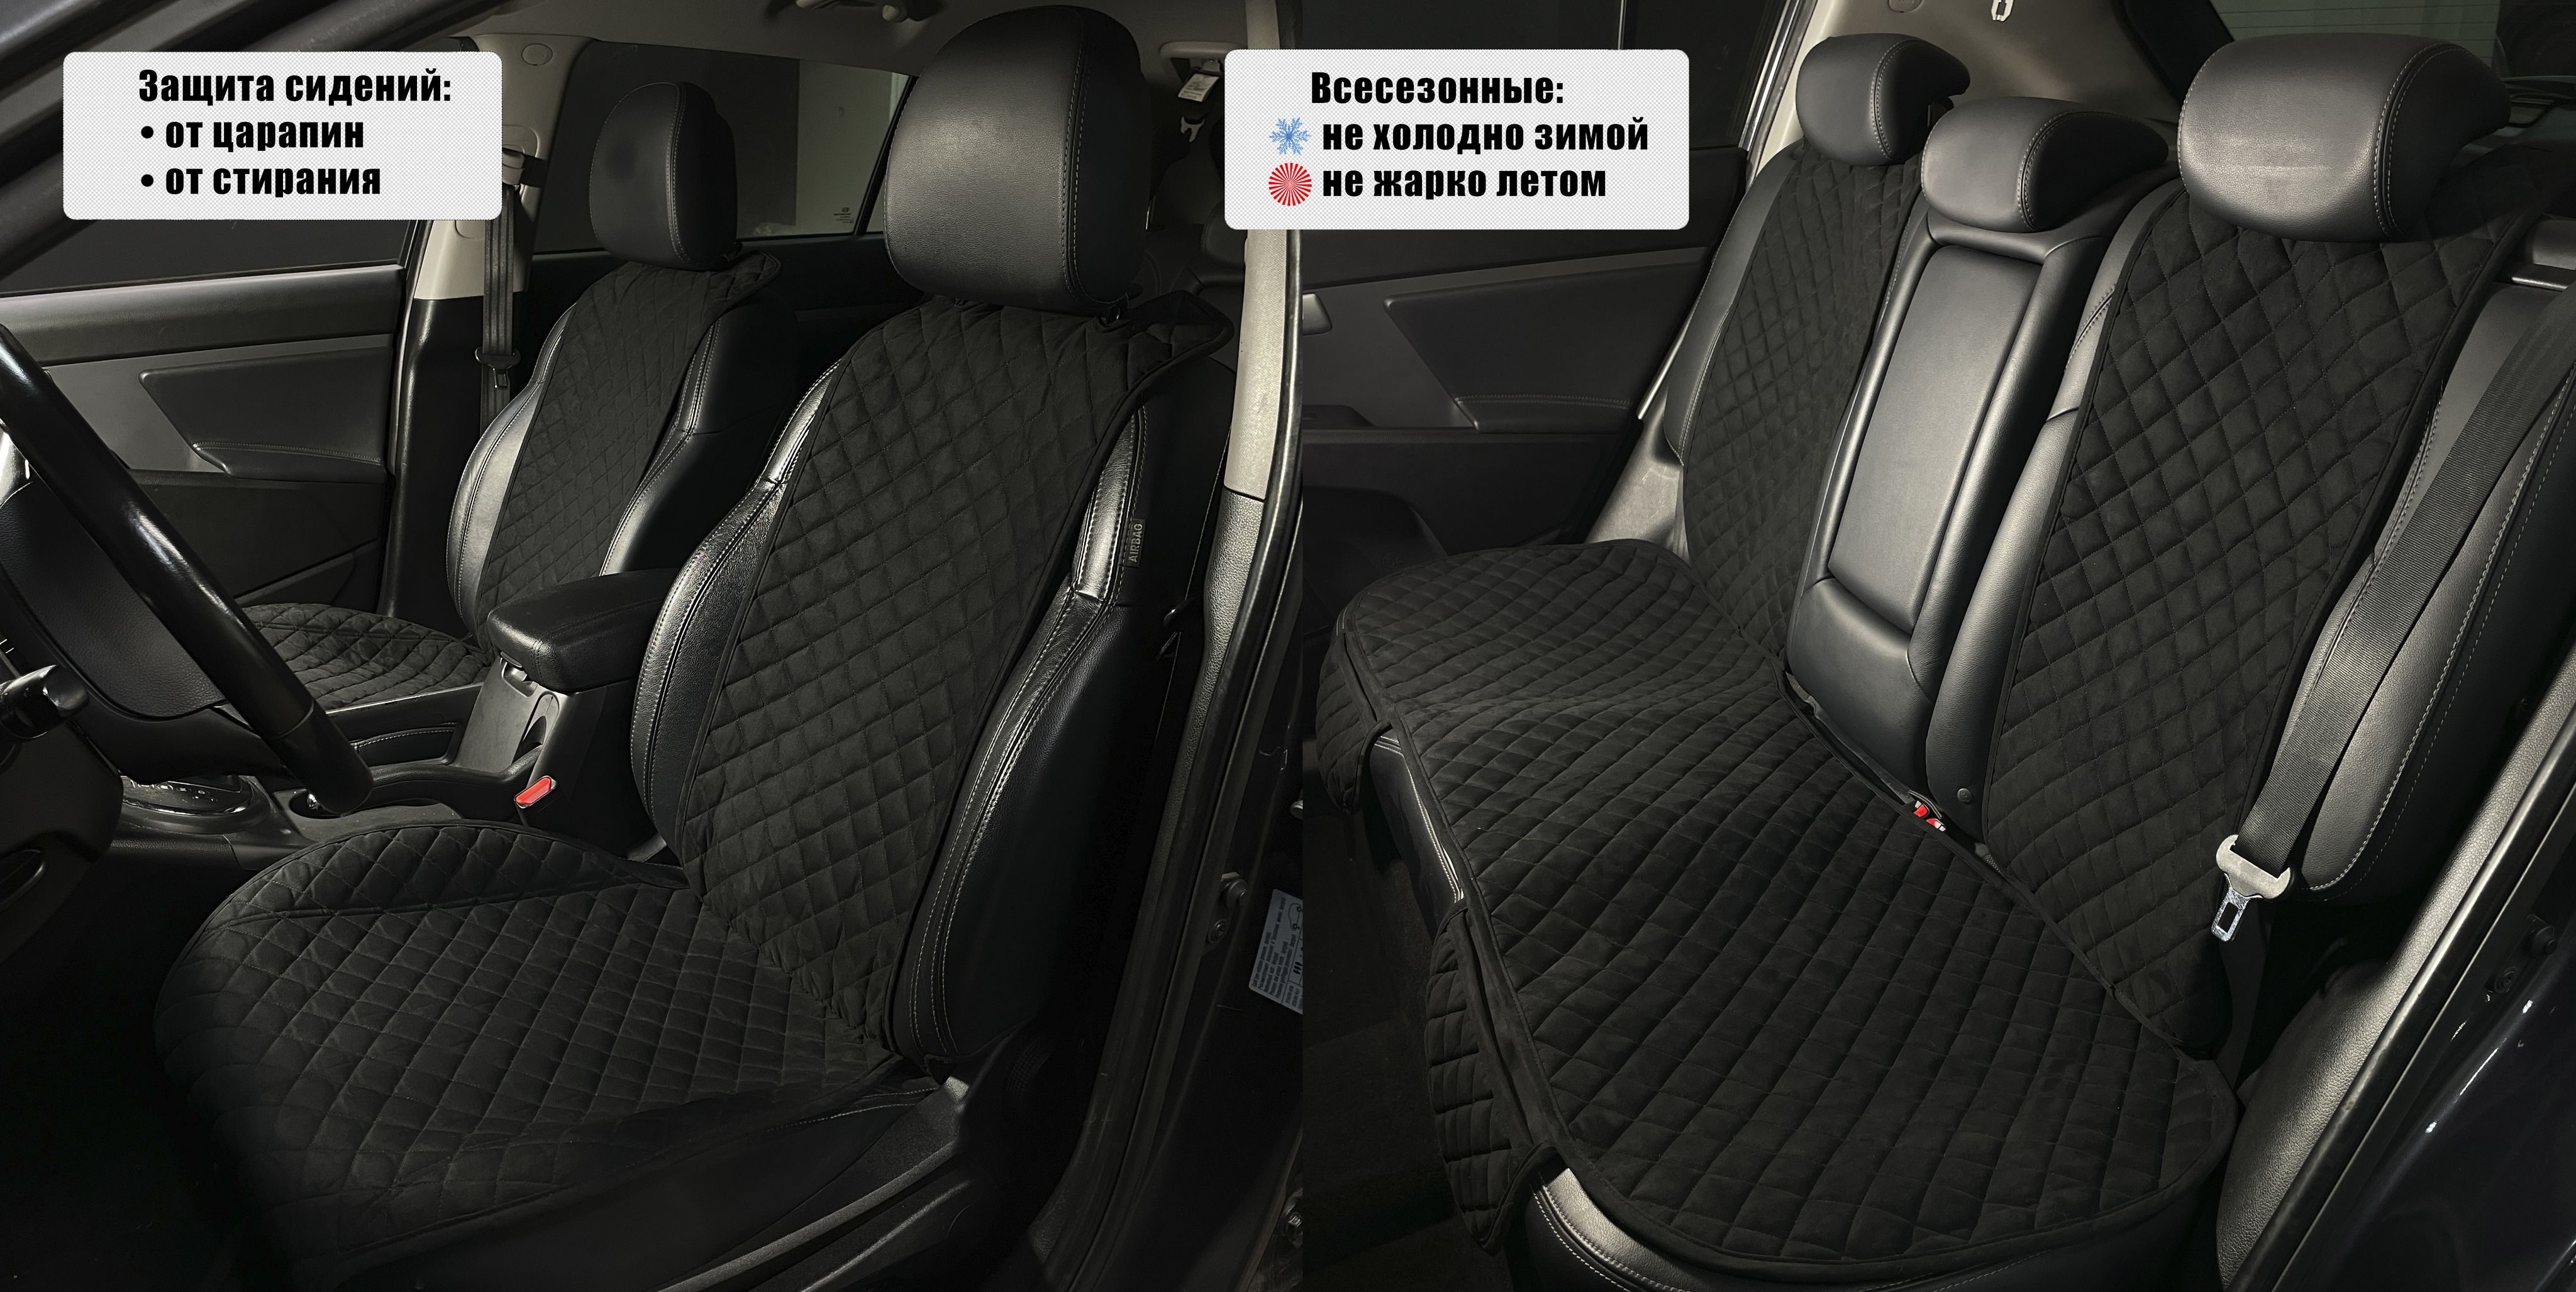 Накидки для БМВ 3 серии (2011 - 2016) универсал 5 дверей / BMW 3-series на весь салон RS,